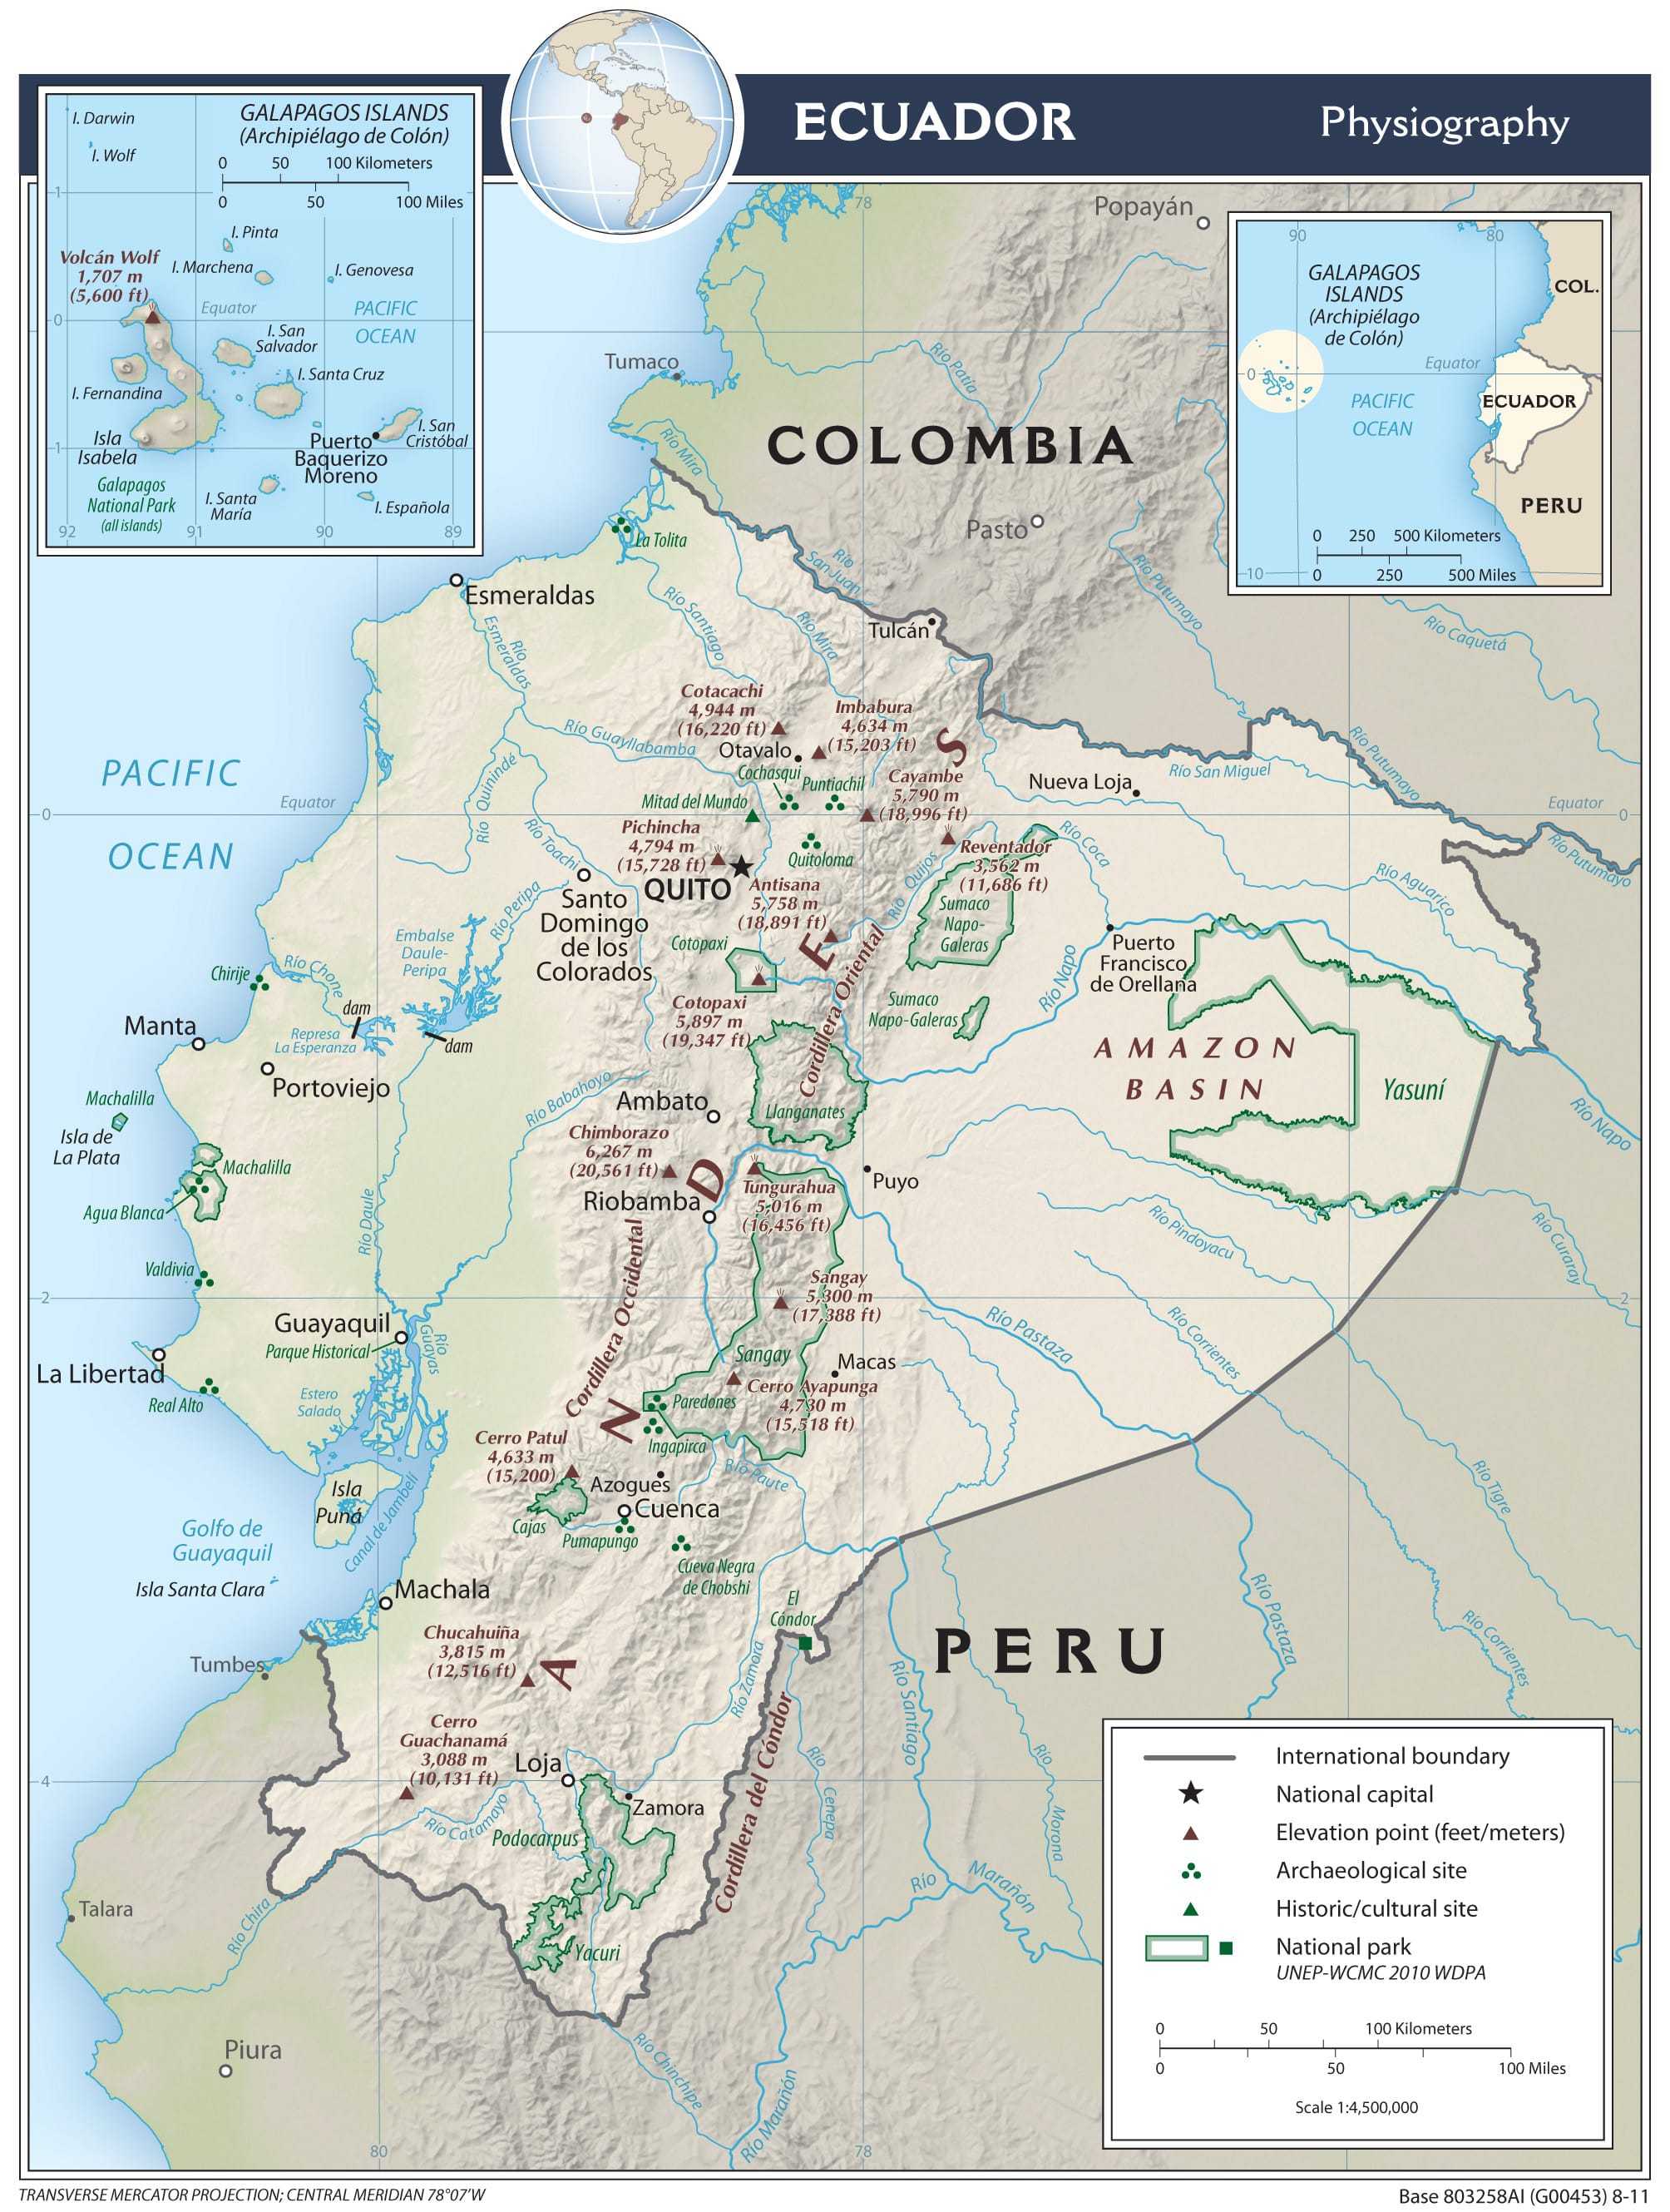 Physiographical map of Ecuador.